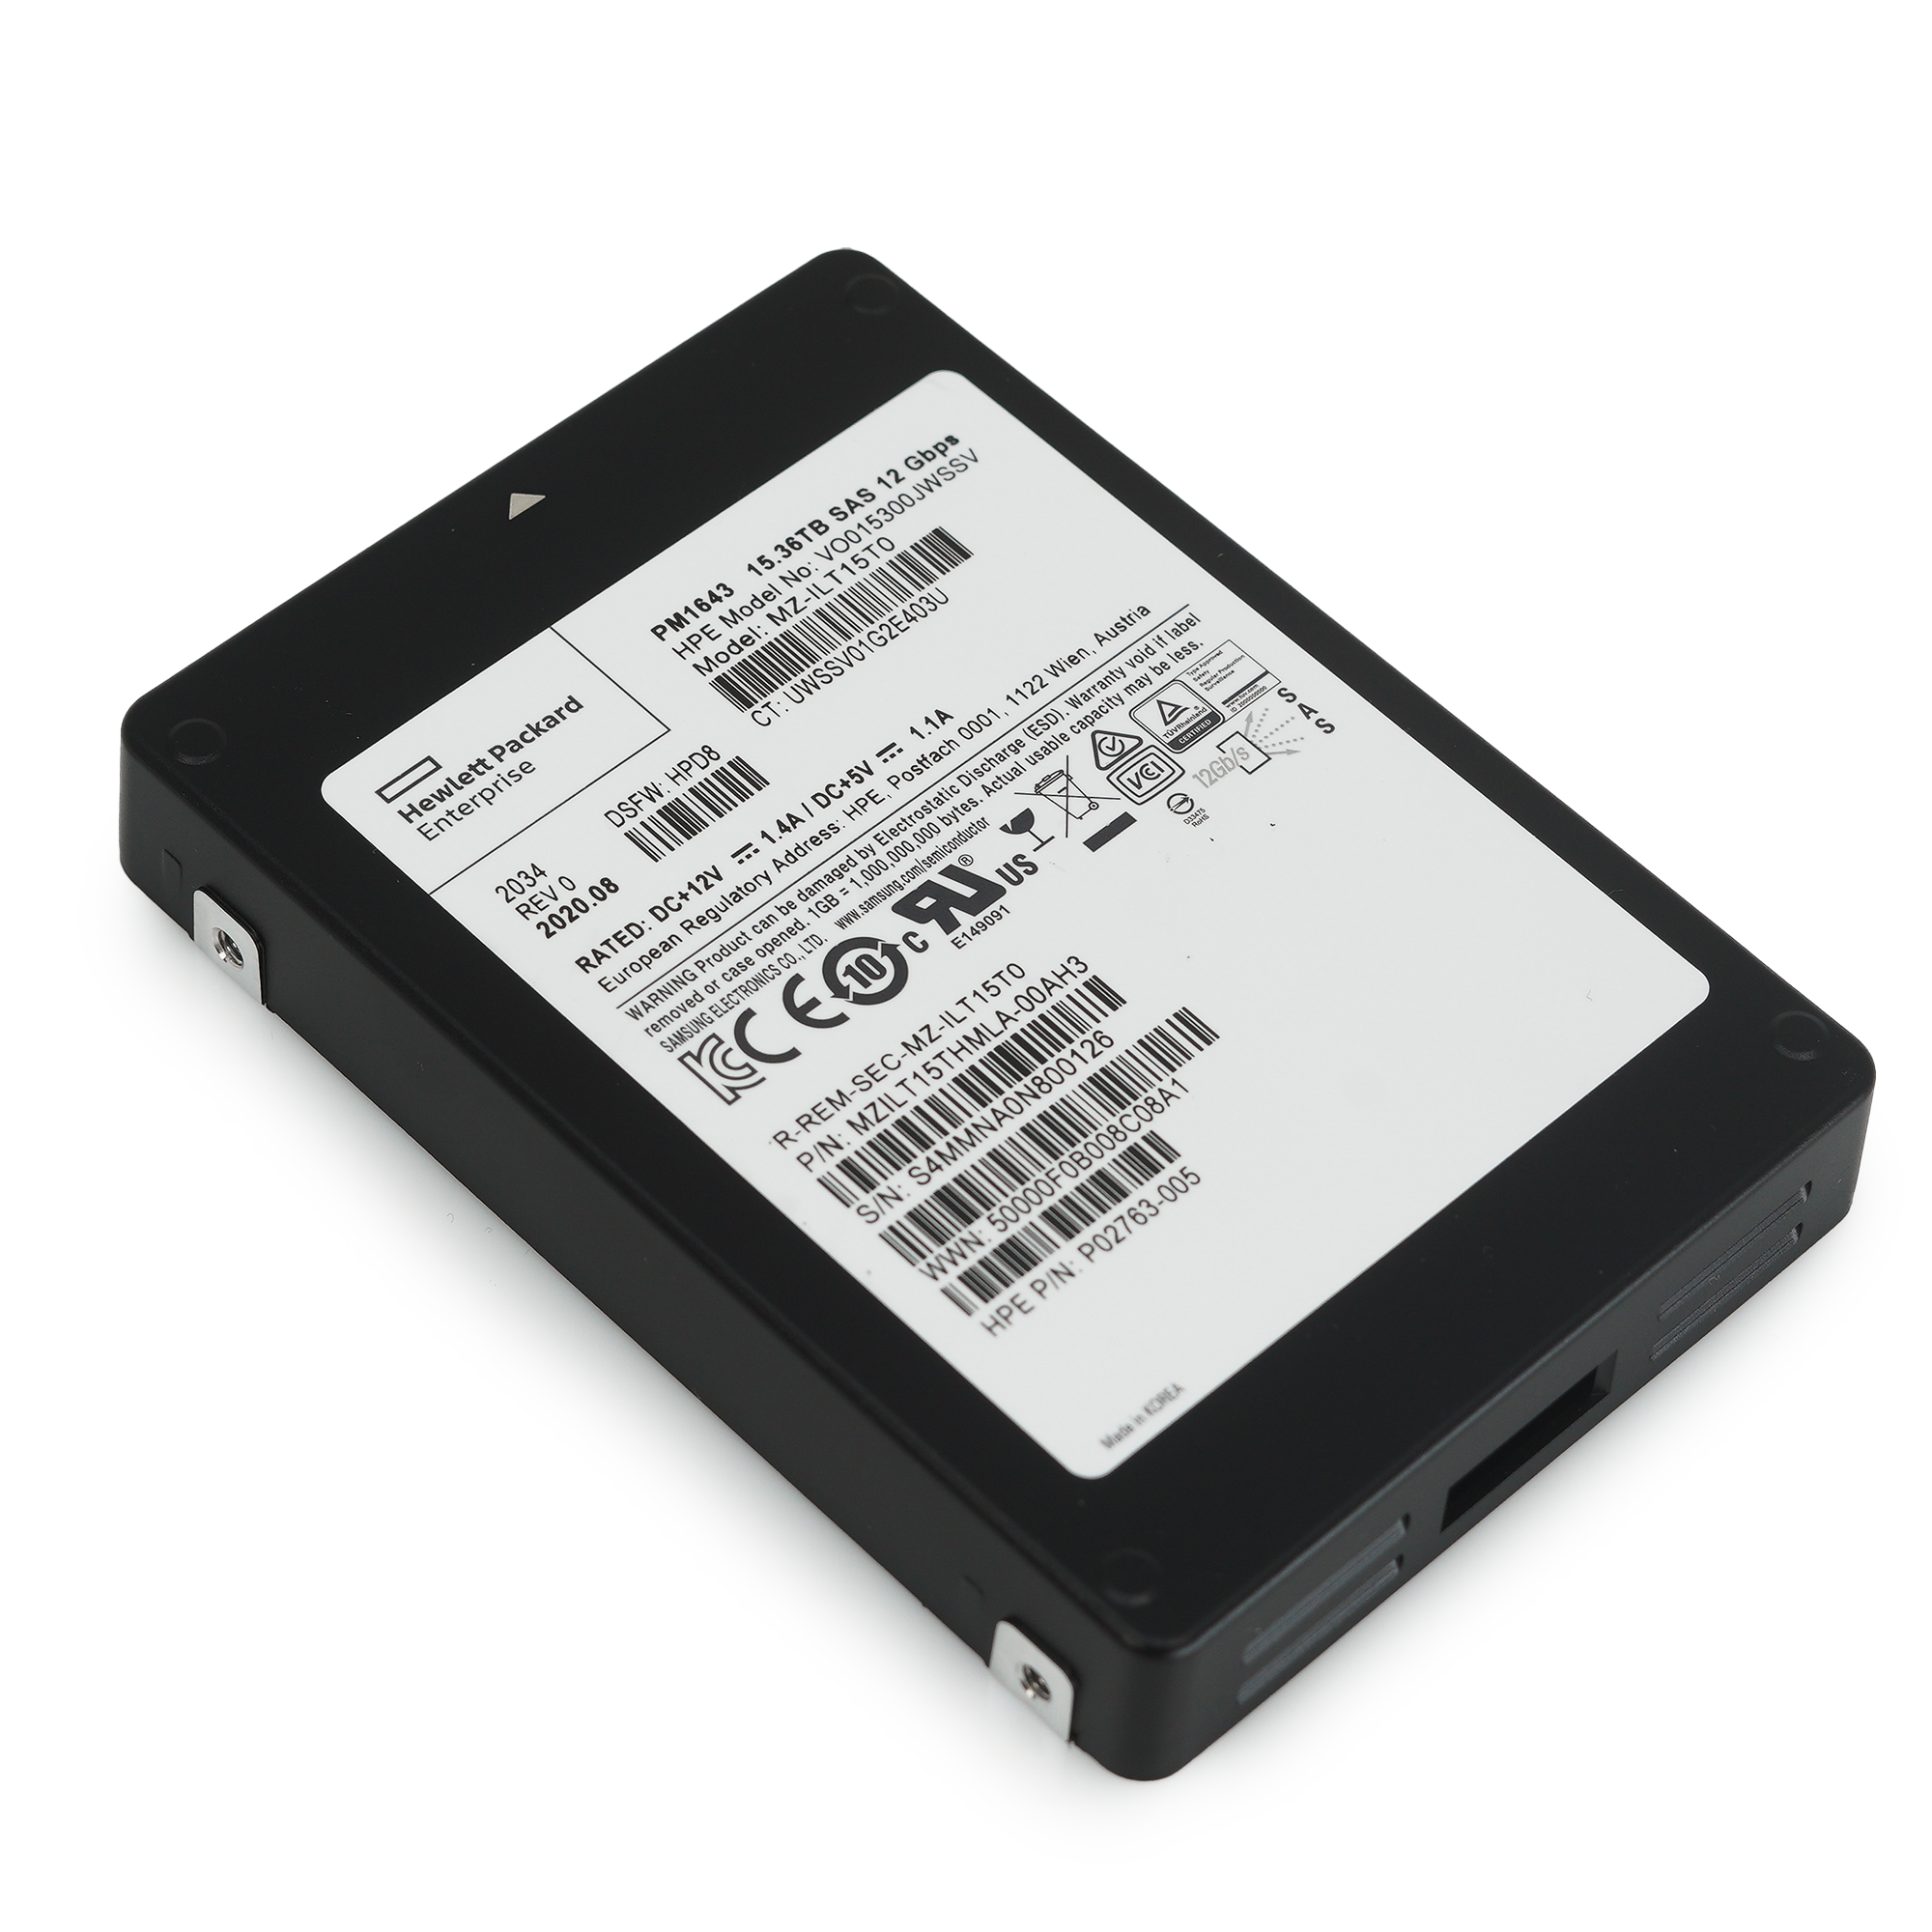 HPE / Samsung PM1643 MZILT15THMAL 15.36TB SAS 12Gb/s 3D TLC 2.5in Solid State Drive